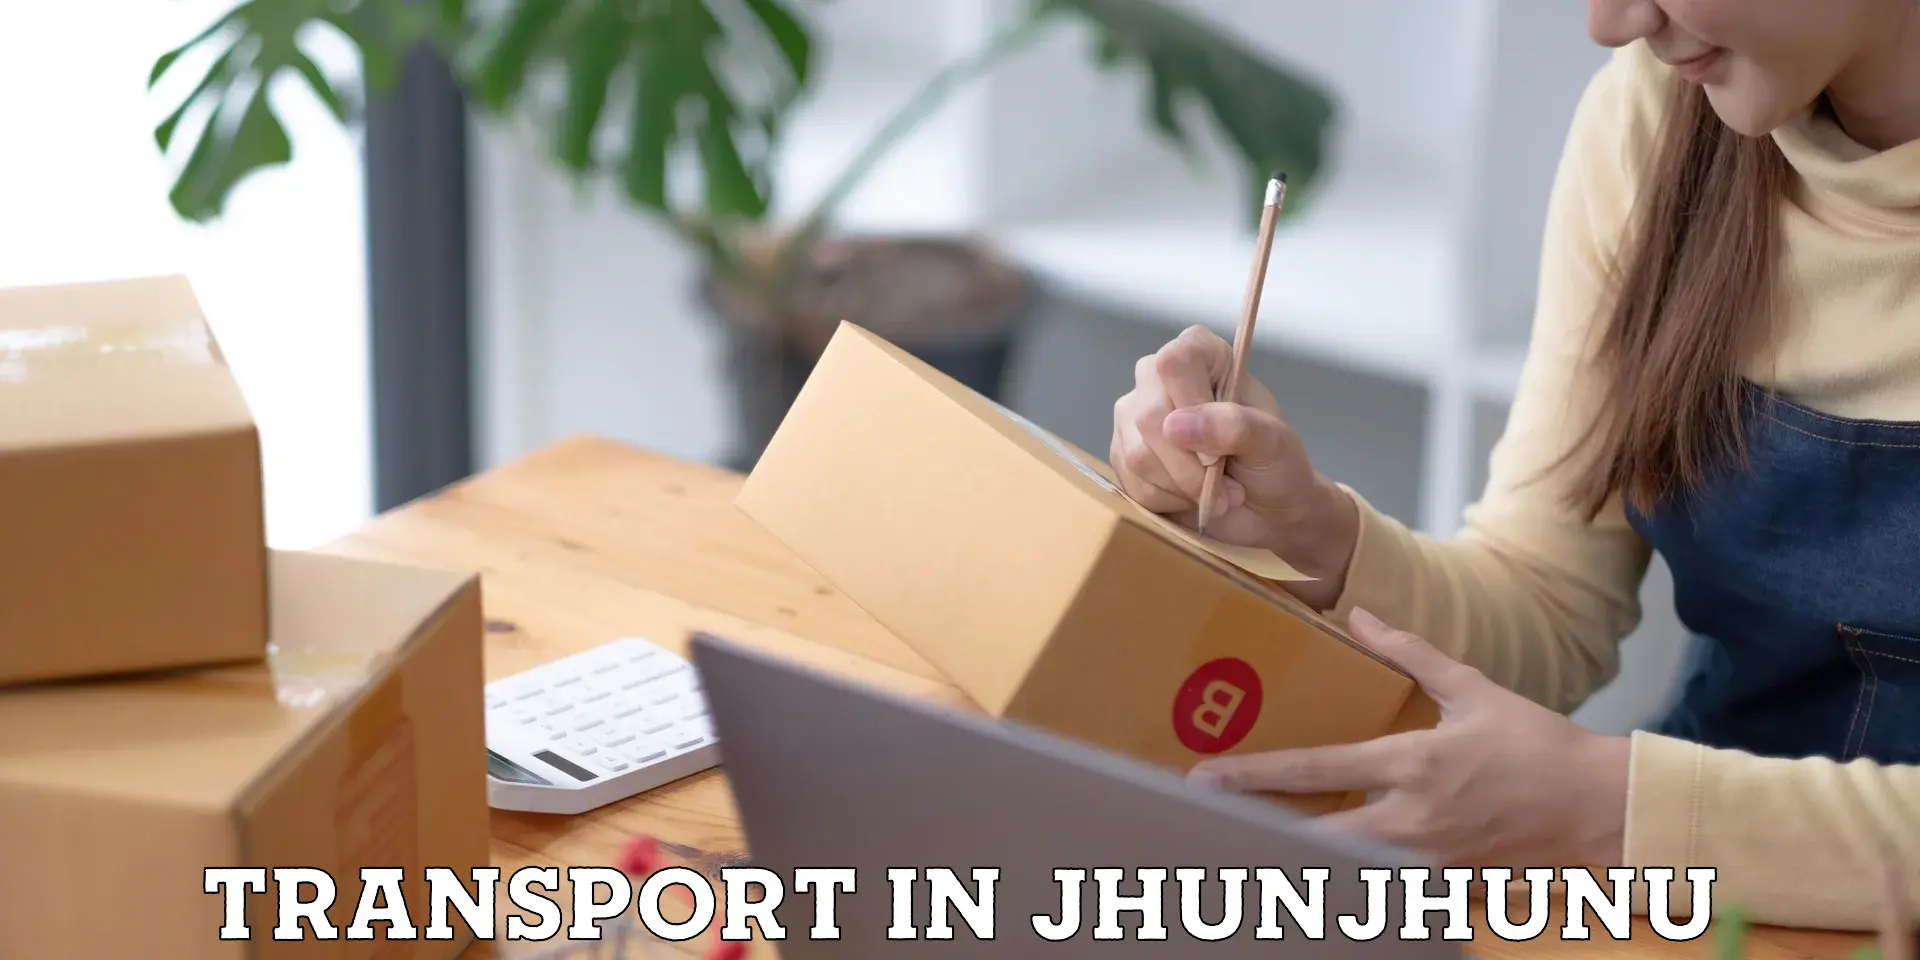 Delivery service in Jhunjhunu